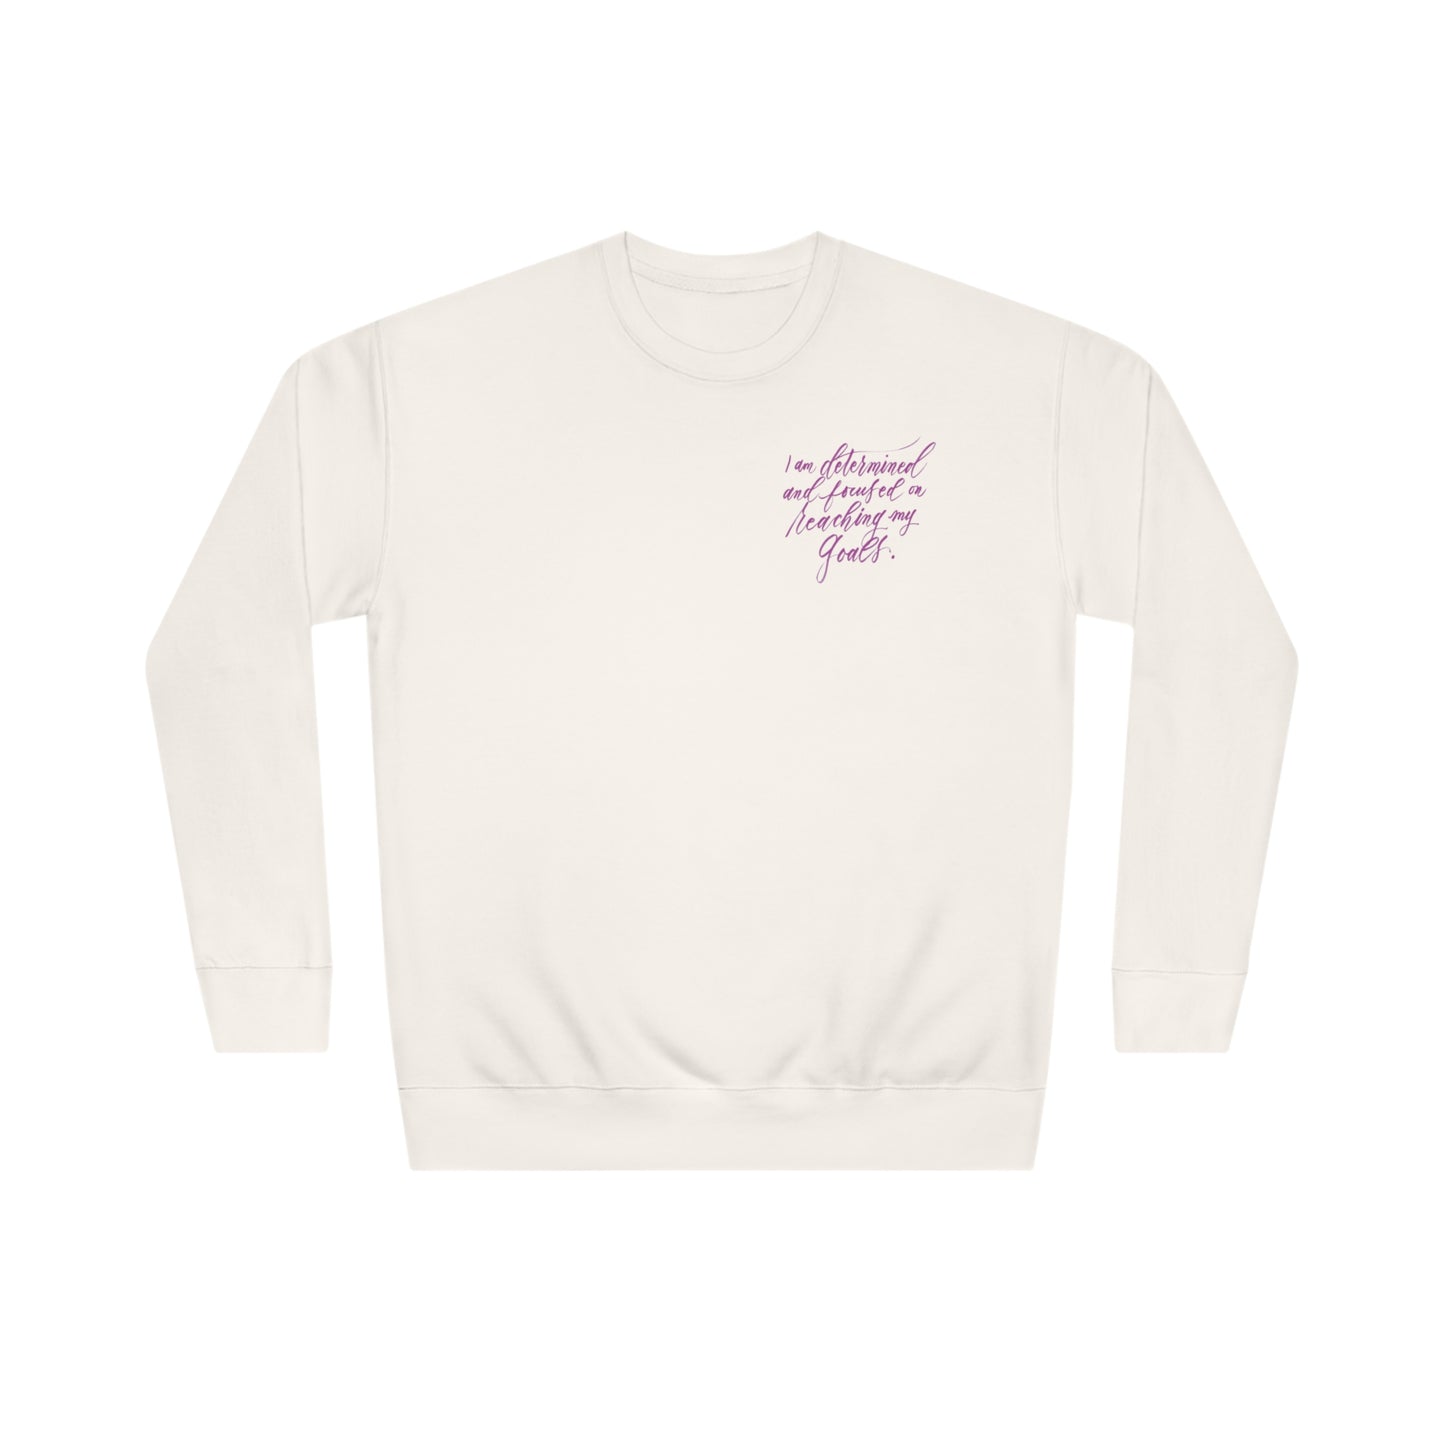 Determination Sweatshirt - "I am determined..." Calligraphy Printed Cotton Blend ADULT Unisex Crewneck Sweatshirt - I am Empowered #01